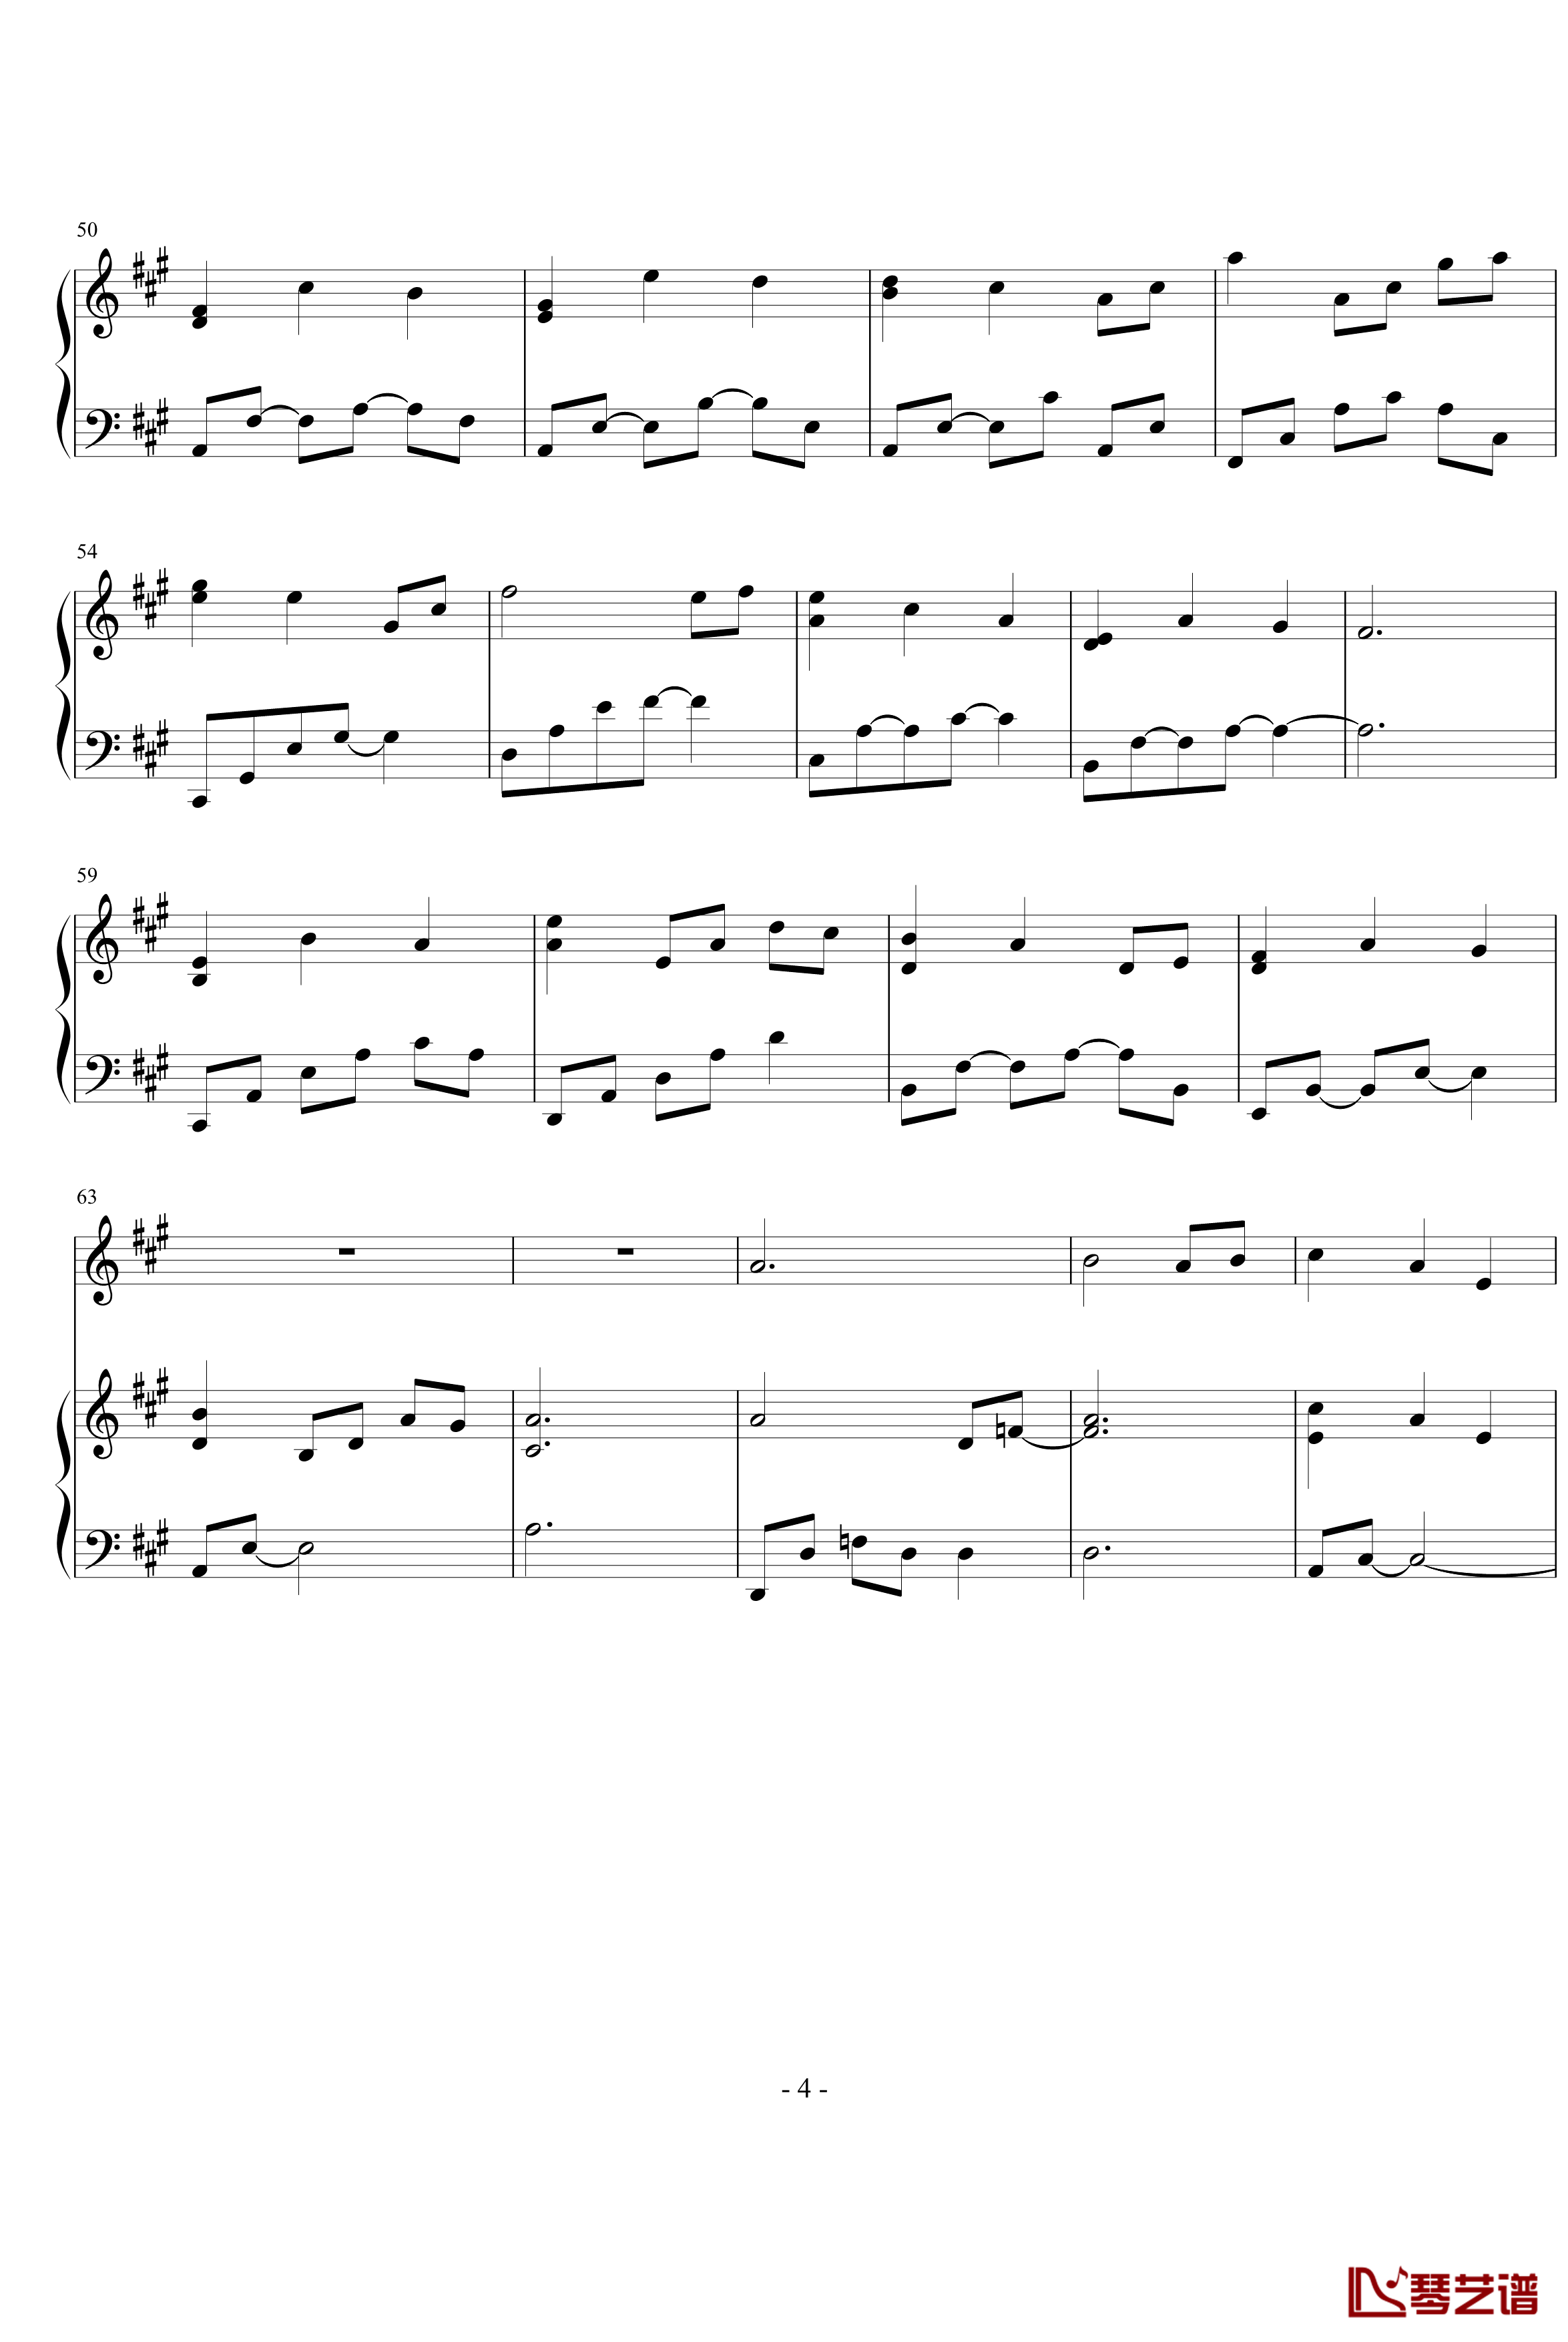 Ahpeuge Hweemong Hagi钢琴谱-Yiruma